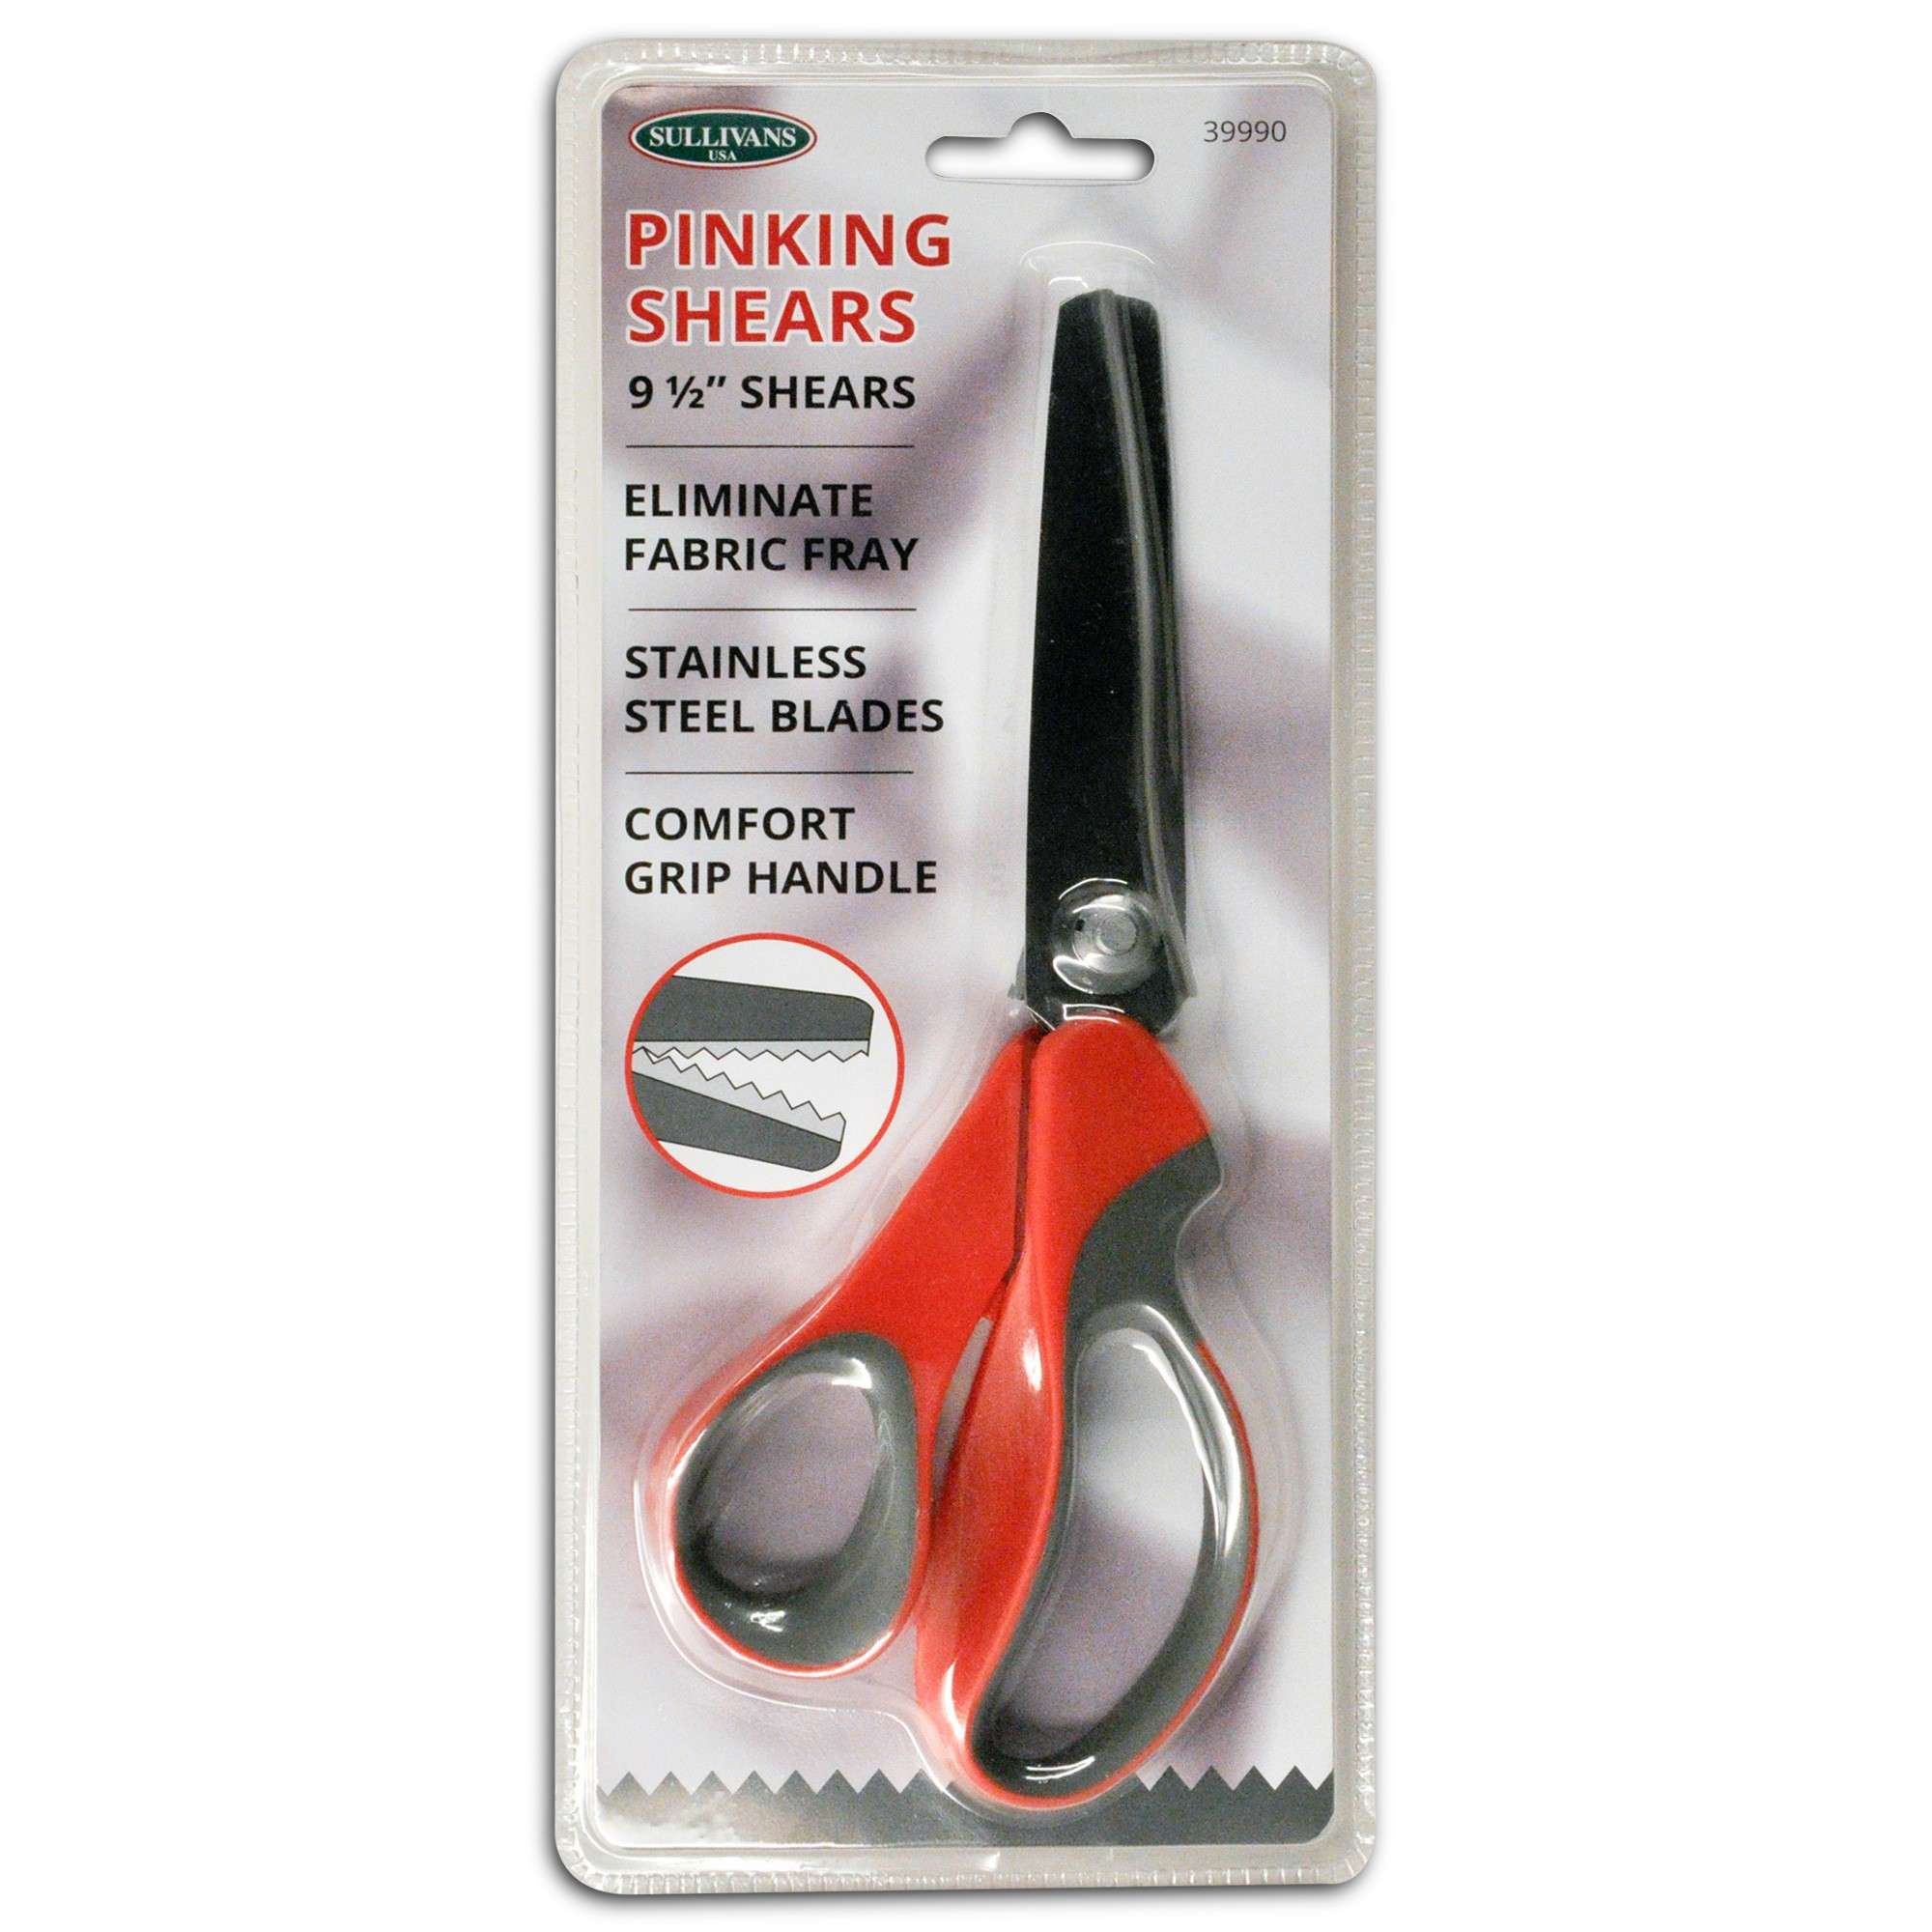 Lightweight LDH Pinking Shears - 9